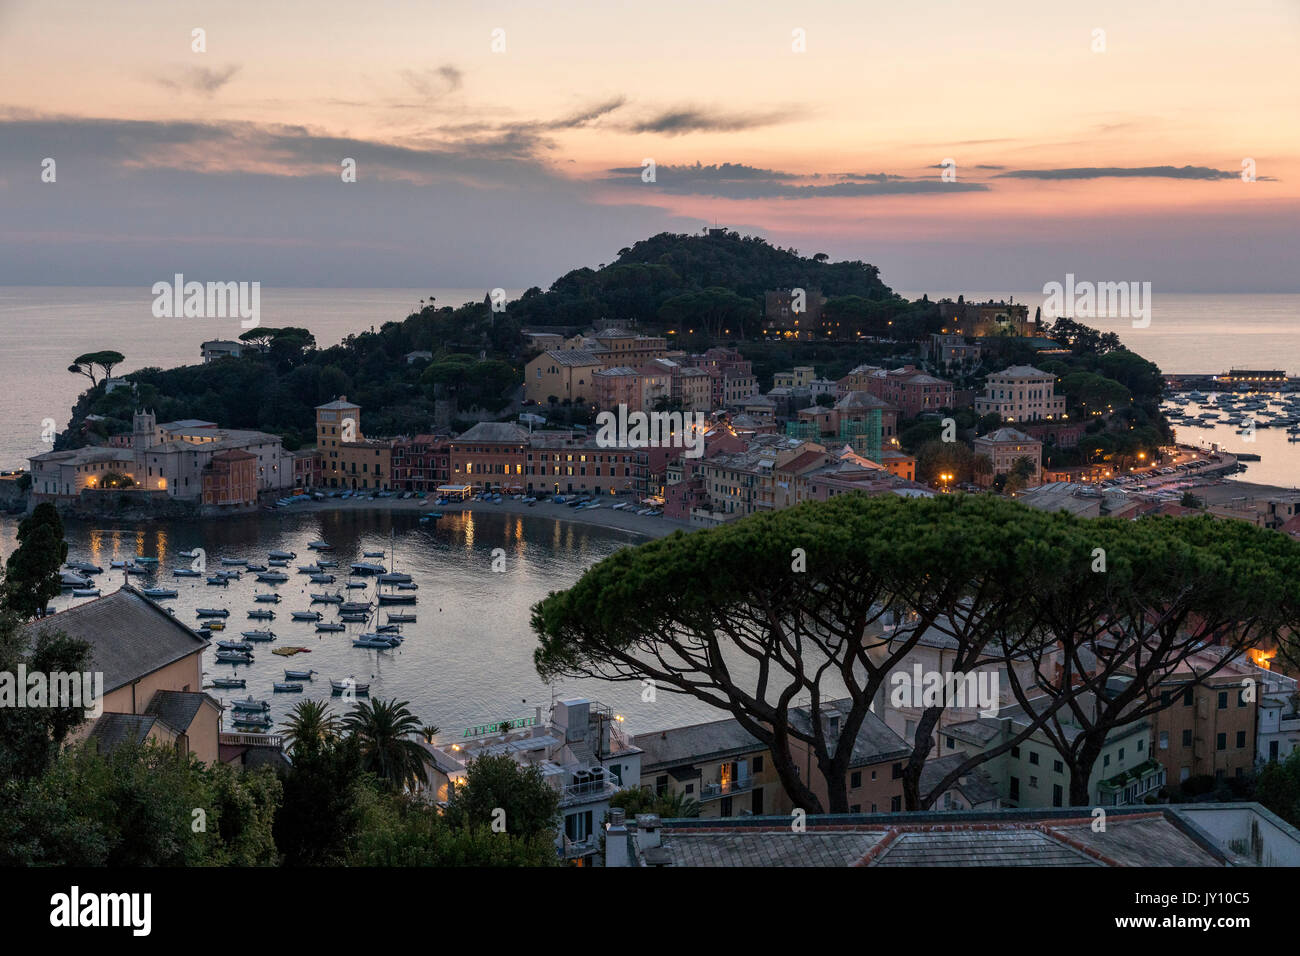 Scenic view of harbor at sunset, Sestri Levante, Liguria, Italy Stock Photo